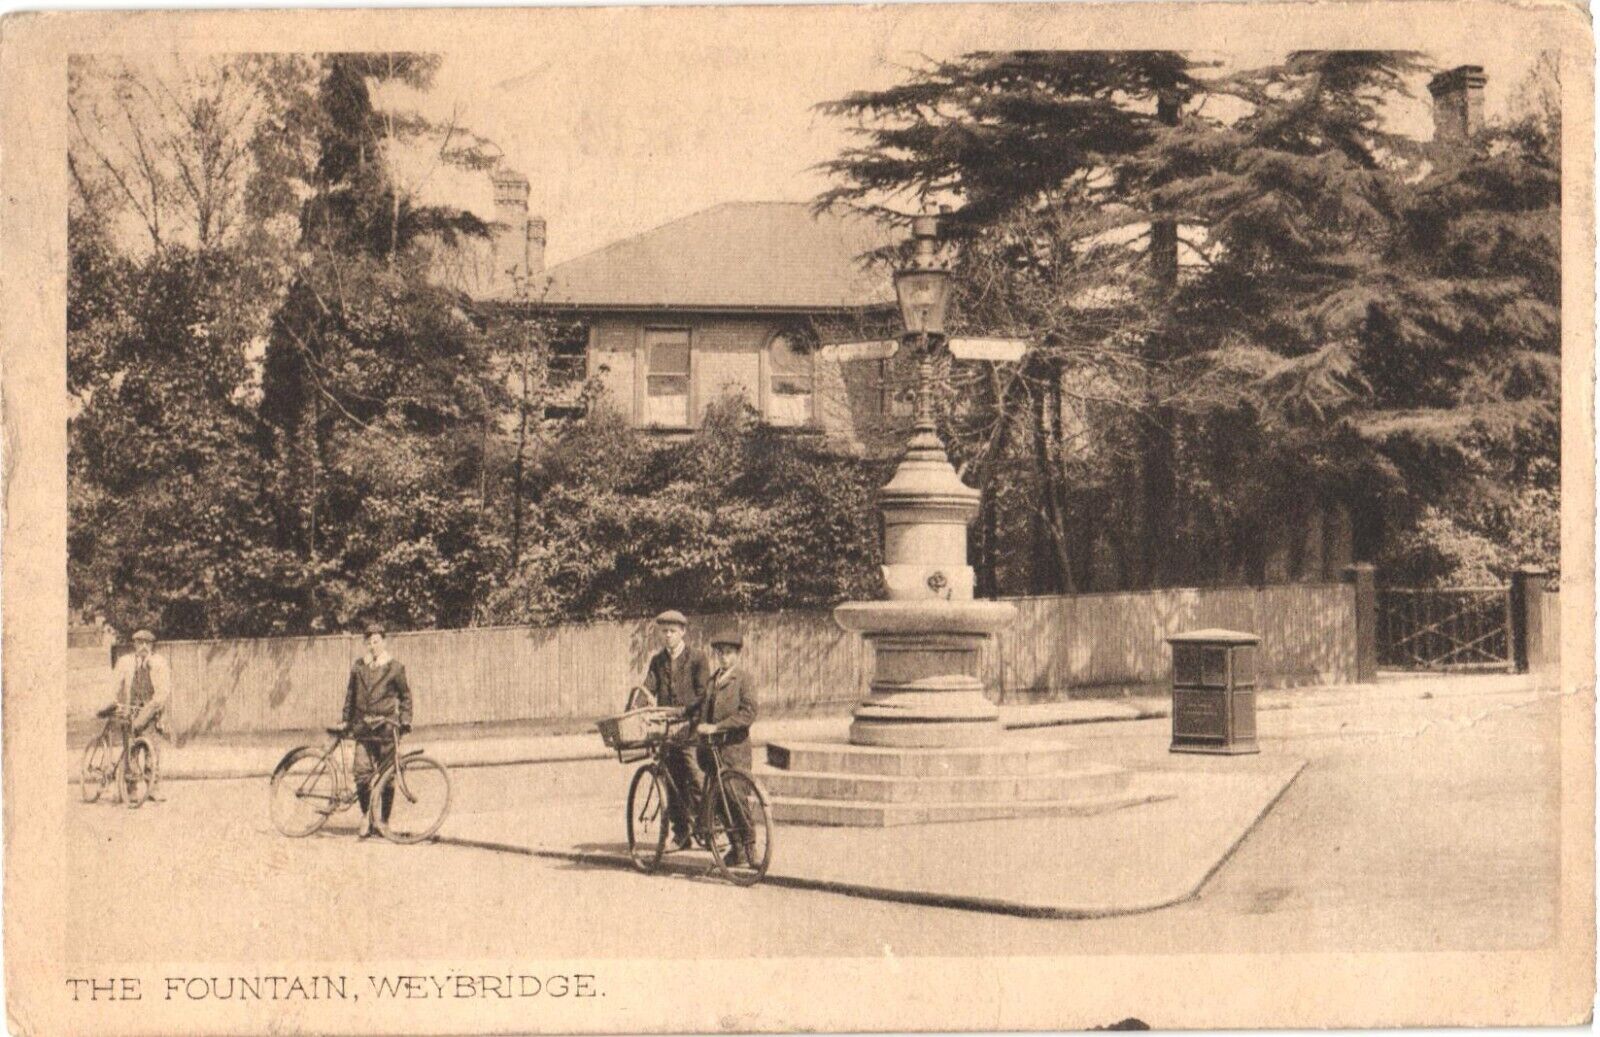 Boys with Their Bikes On The Fountain, Weybridge, Surrey, England Postcard